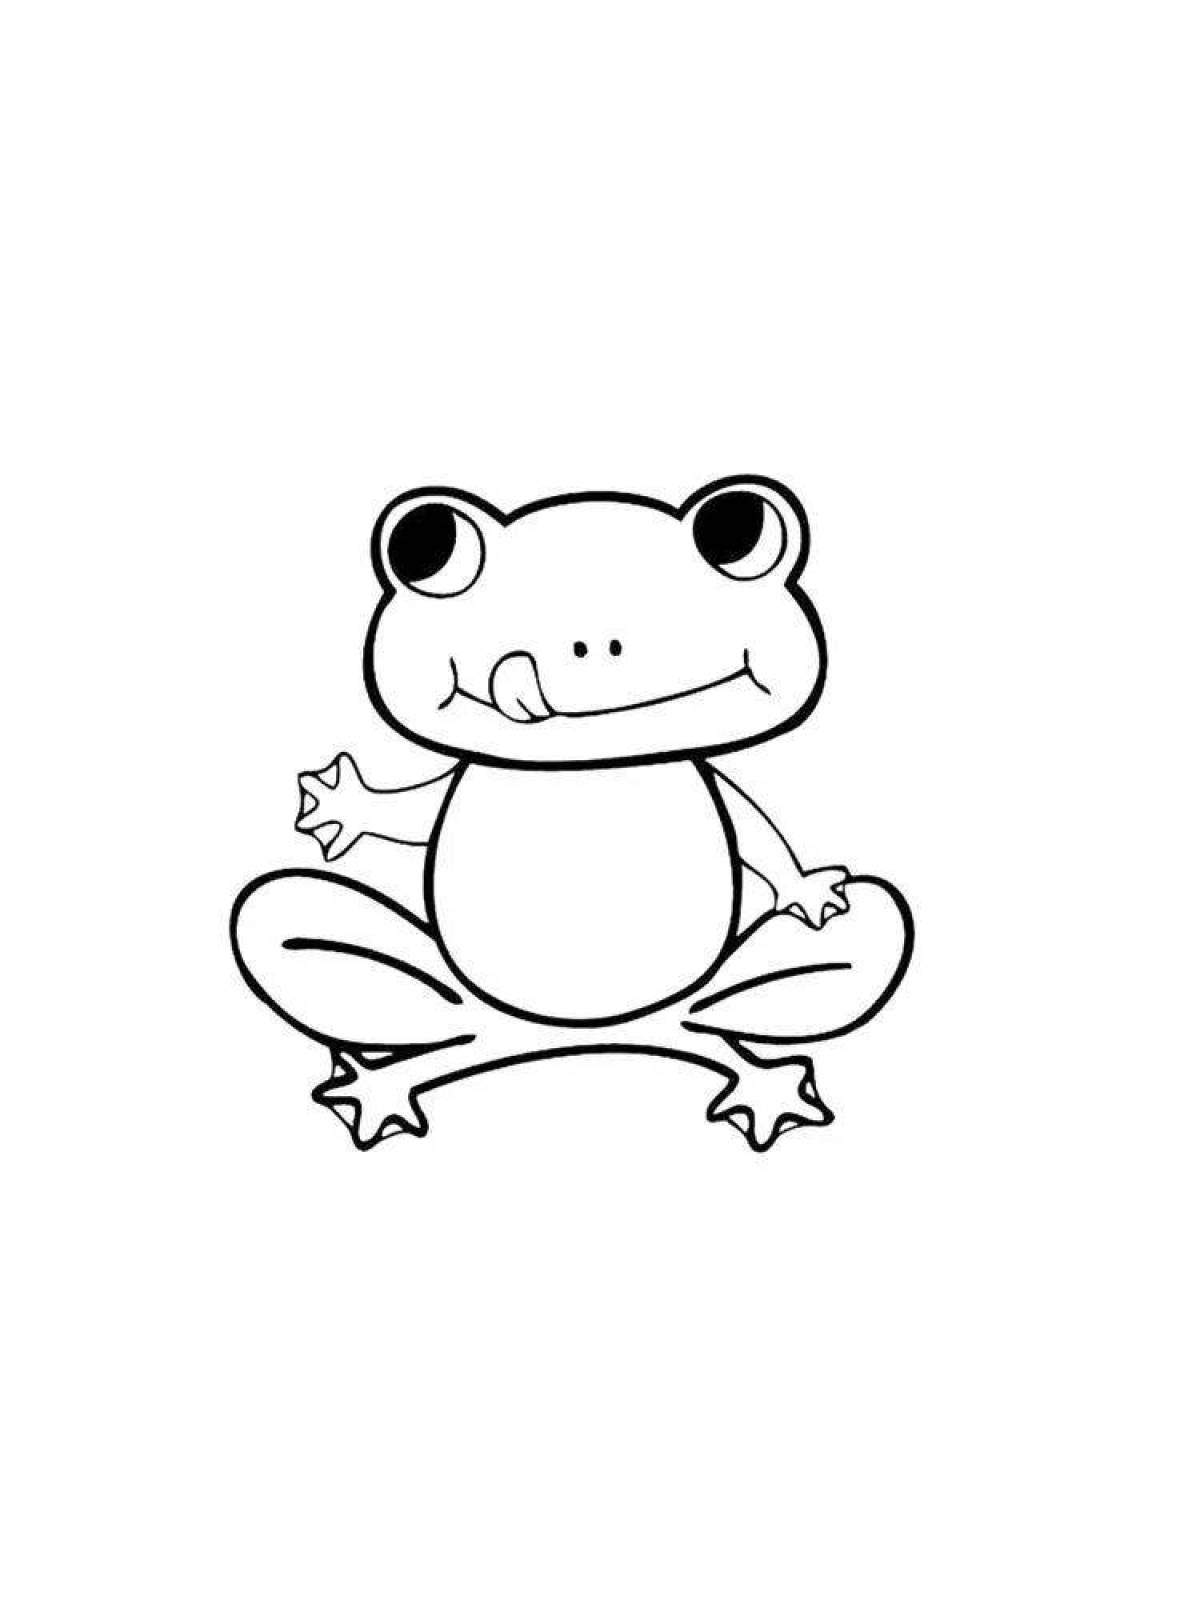 Adorable cute frog coloring book